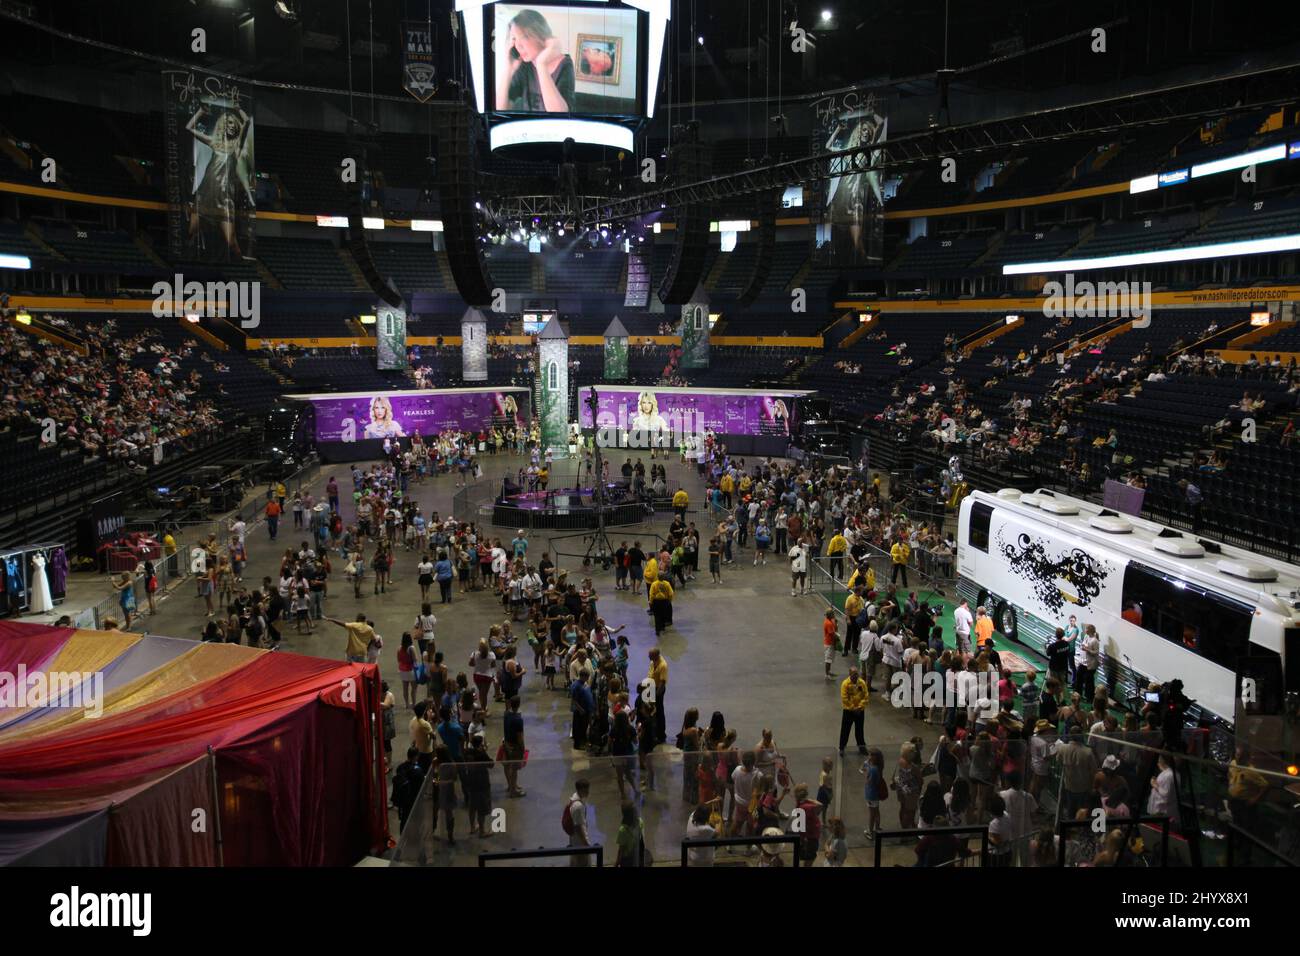 Bridgestone arena nashville arena hi-res stock photography and images -  Alamy